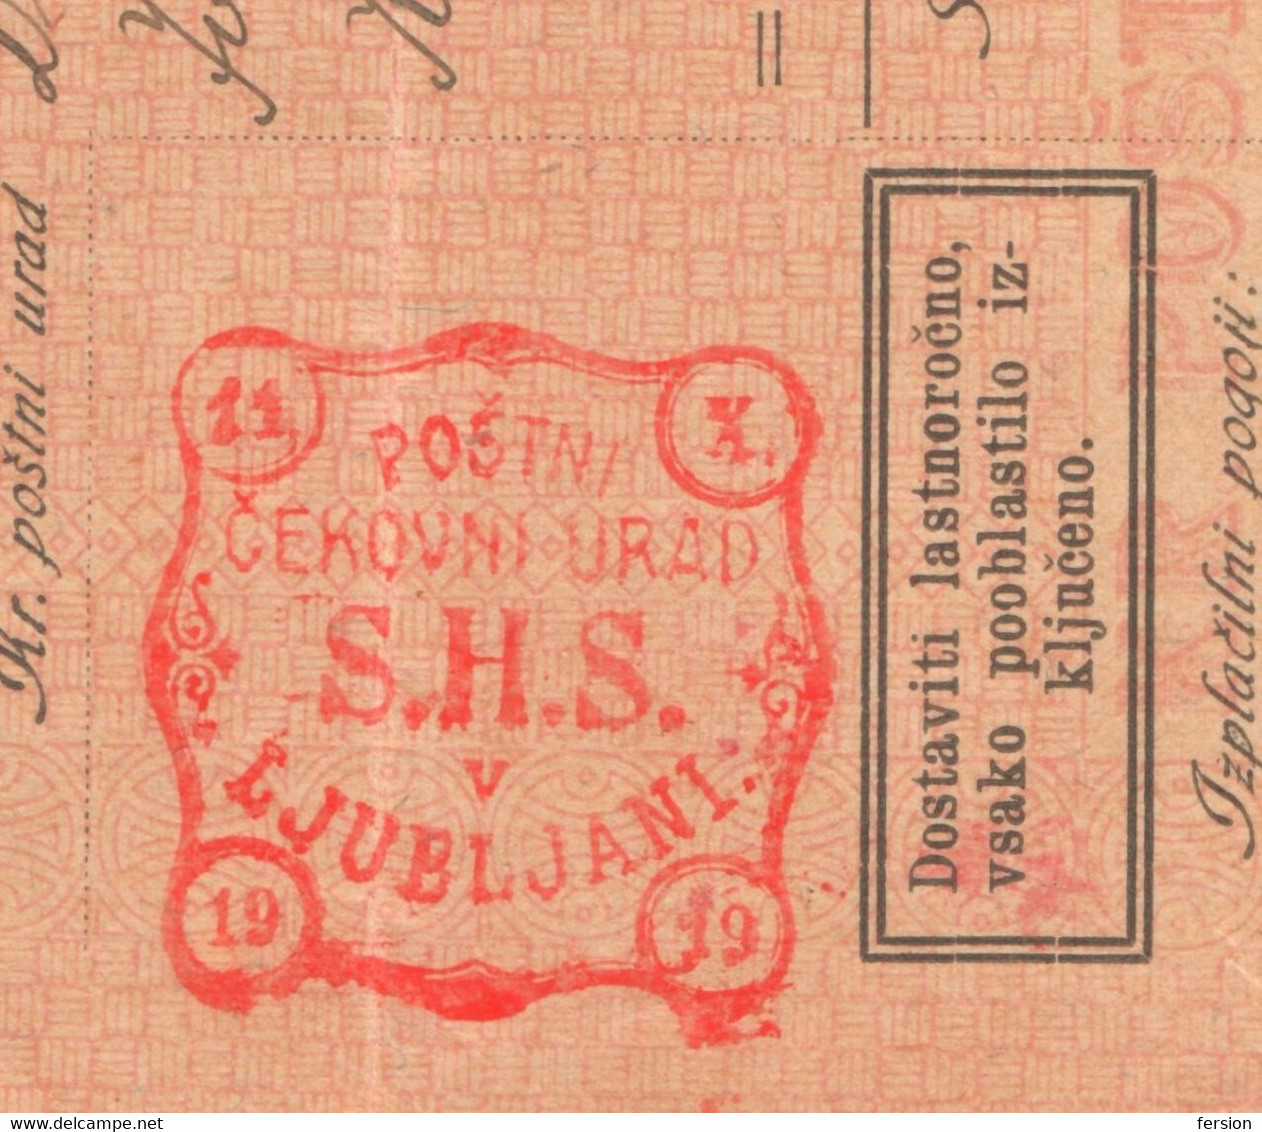 DUE PORTO Stamp / Postal Check Money Order Form / Yugoslavia - SHS SLOVENIA Ljubljana - 1919 - Impuestos